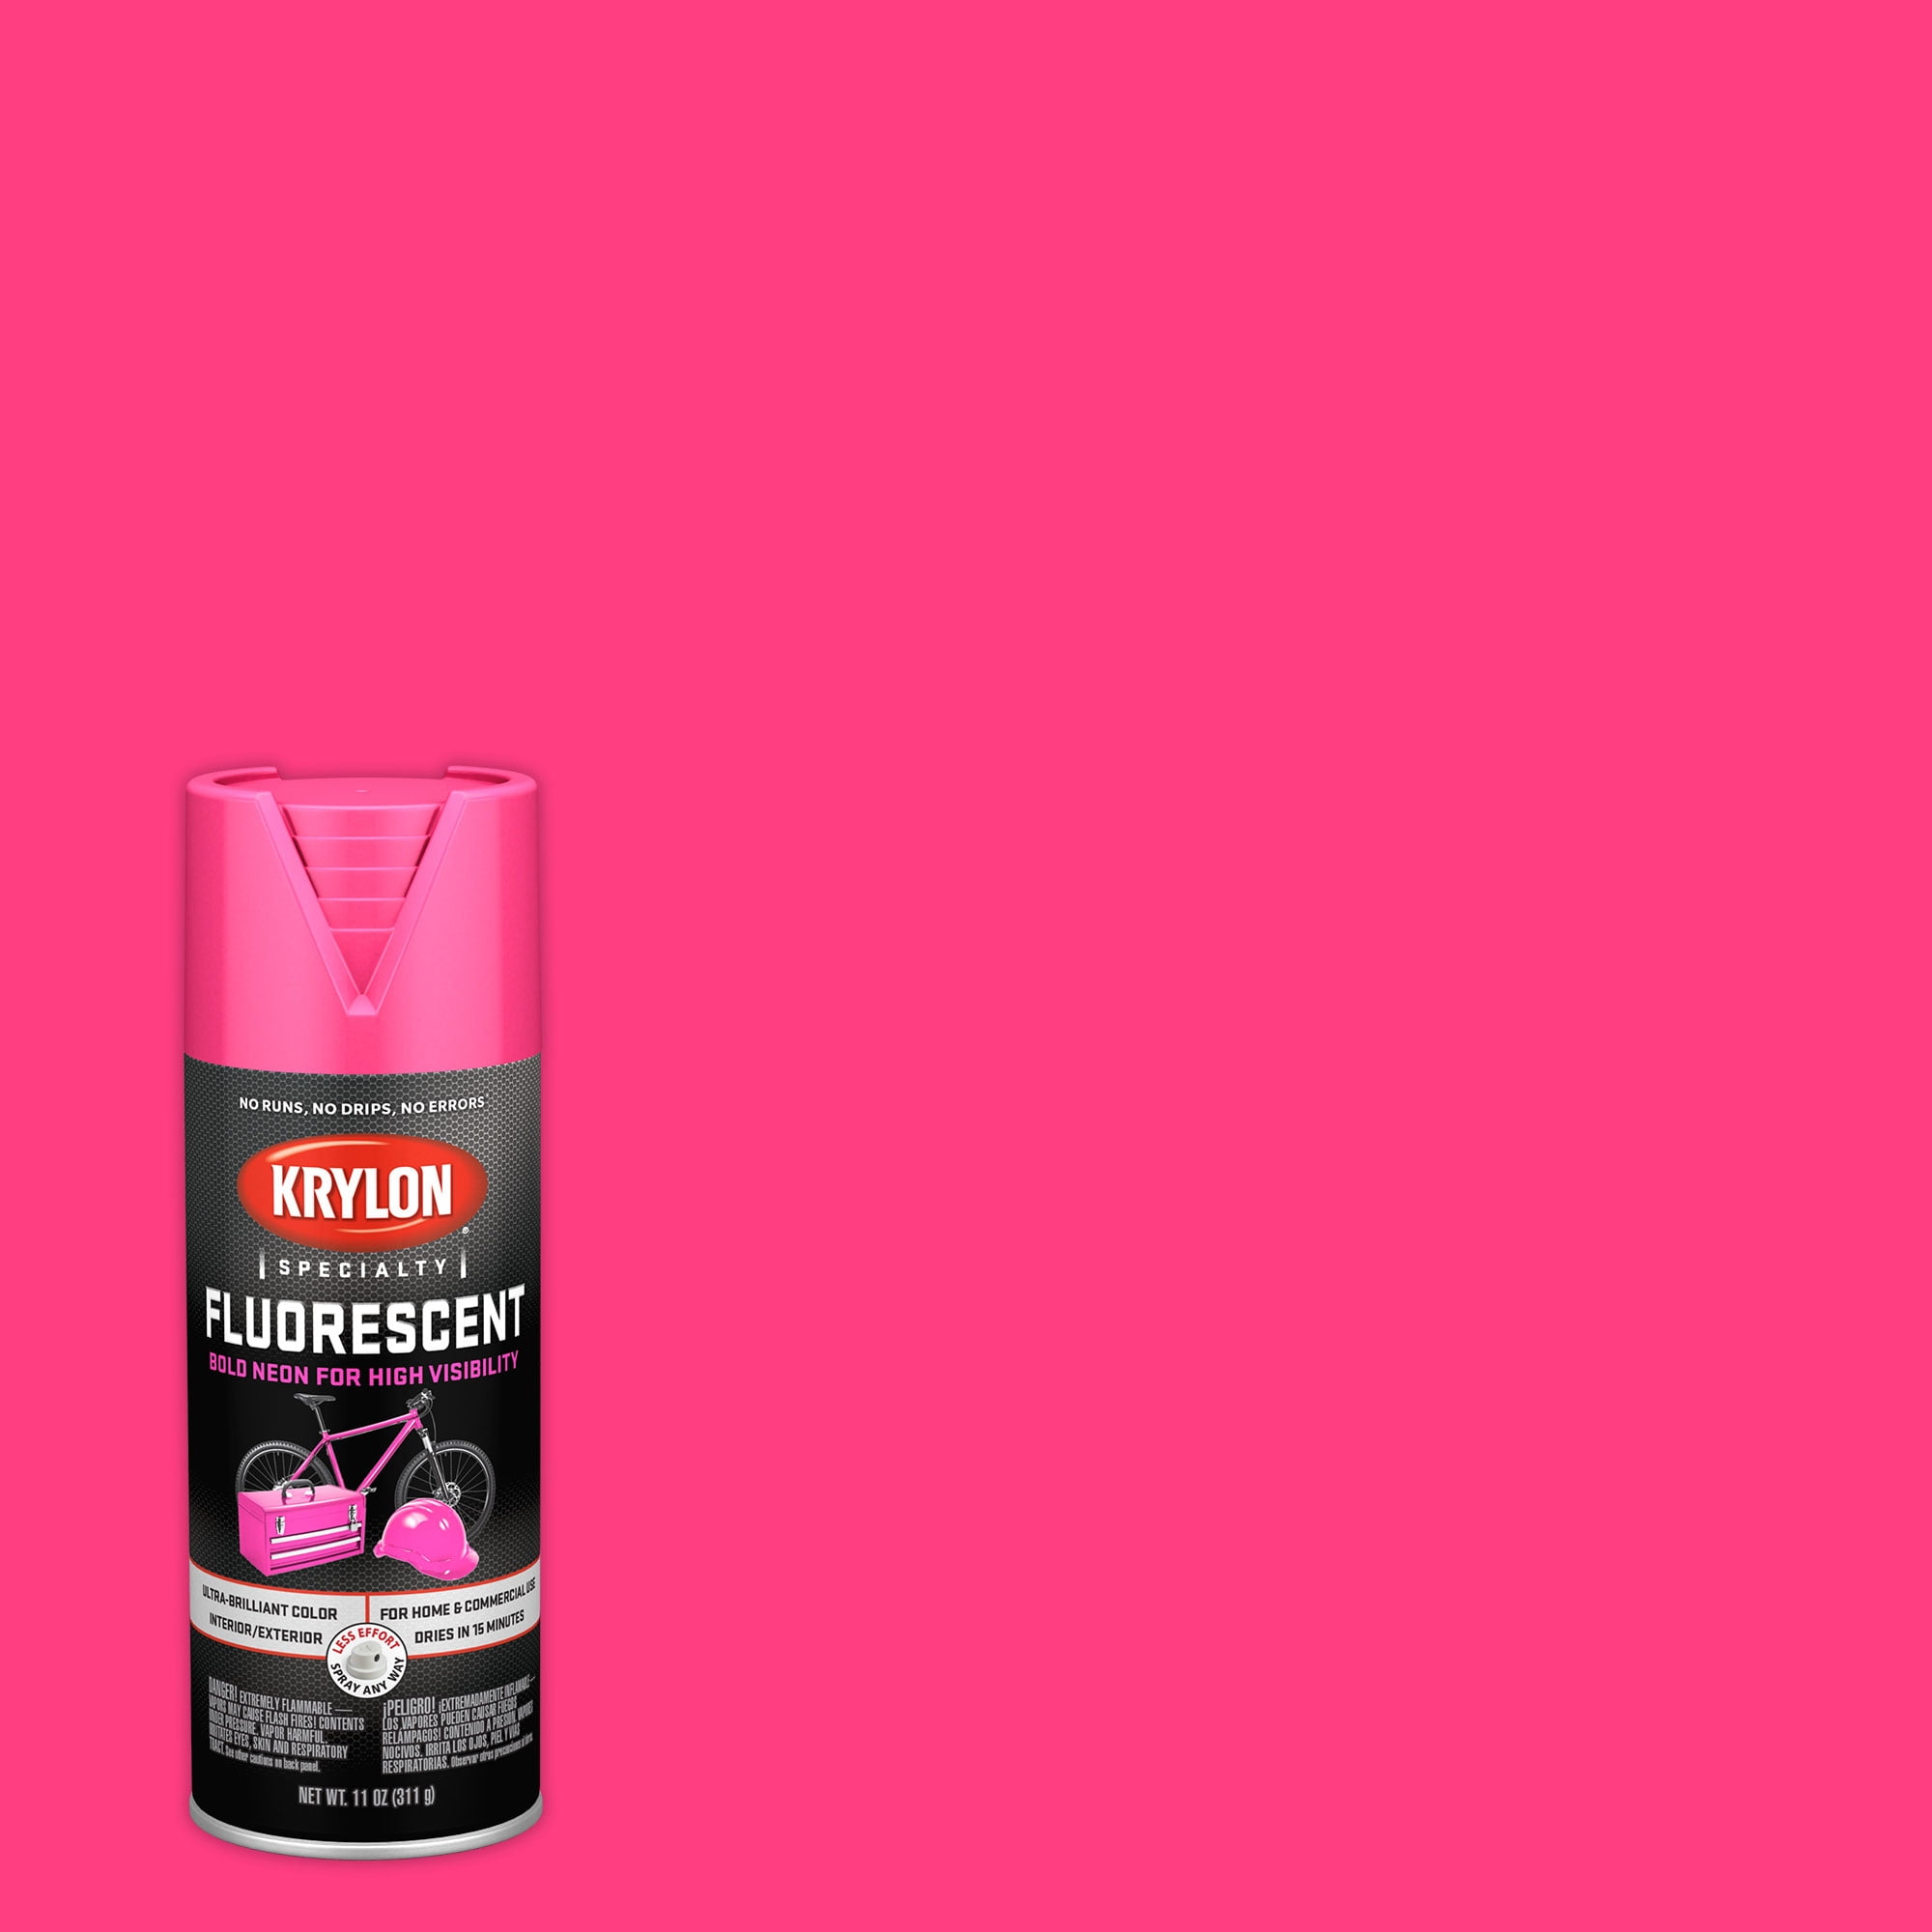 Krylon Appliance Epoxy Gloss Black Spray Paint (NET WT. 12-oz) in the Spray  Paint department at